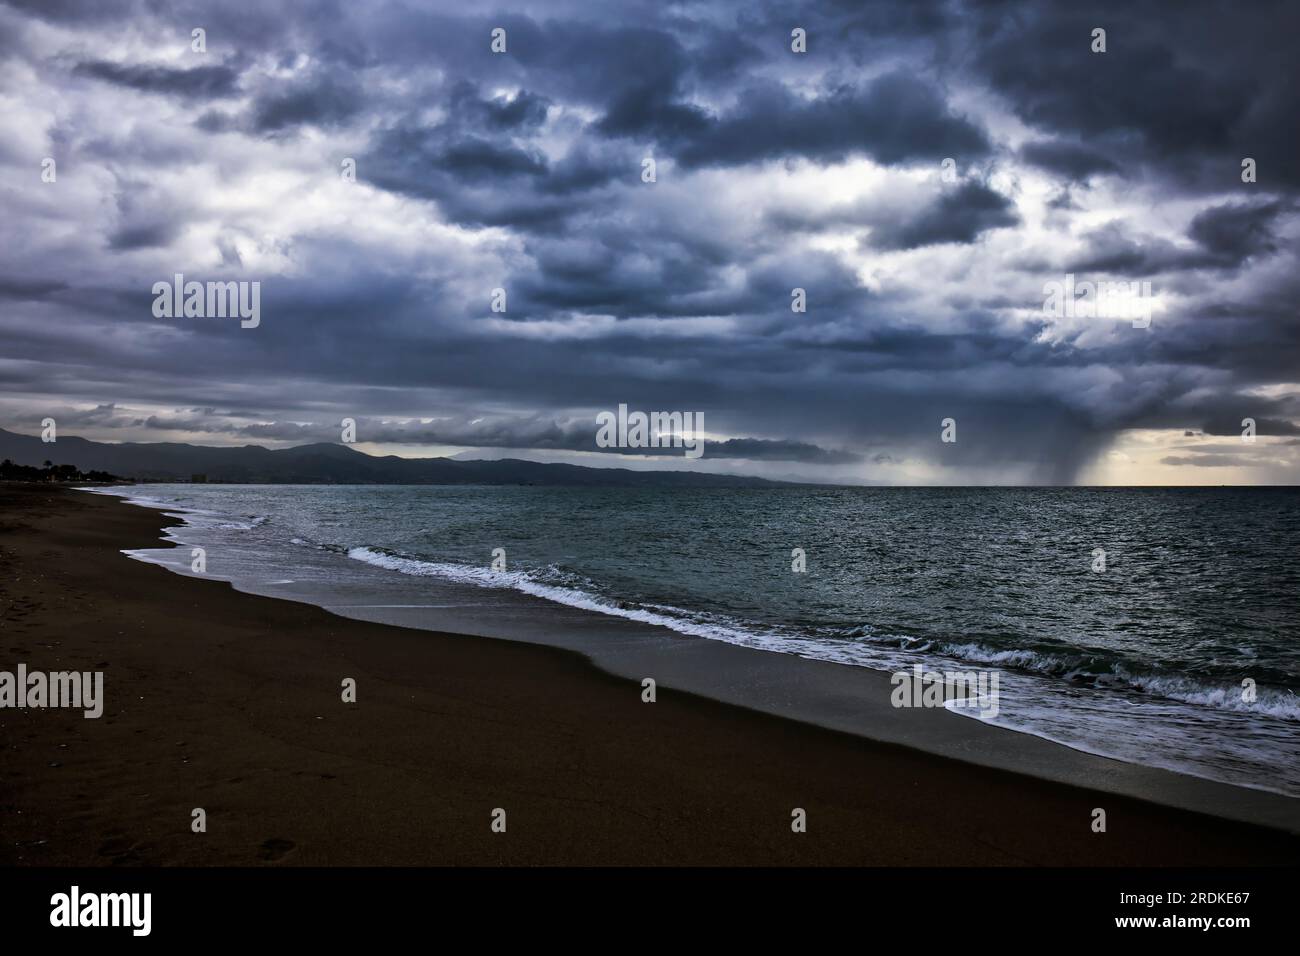 Winter beach scene, Torremolinos, Costa del Sol, Spain.  Approaching rain sqaull over sea. Stock Photo